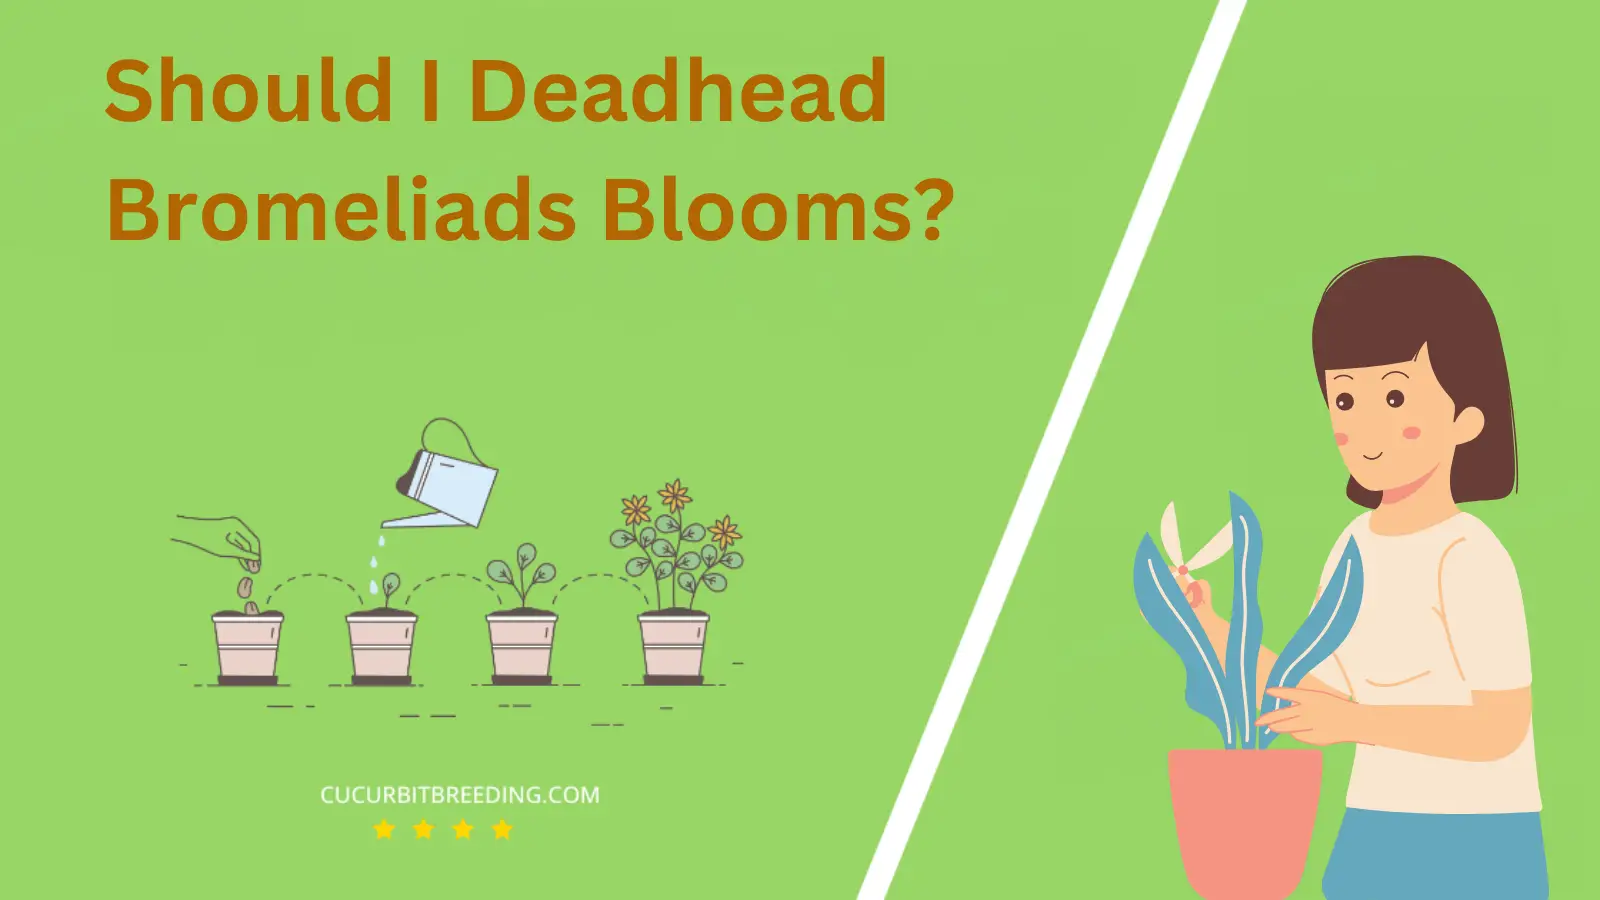 Should I Deadhead Bromeliads Blooms?